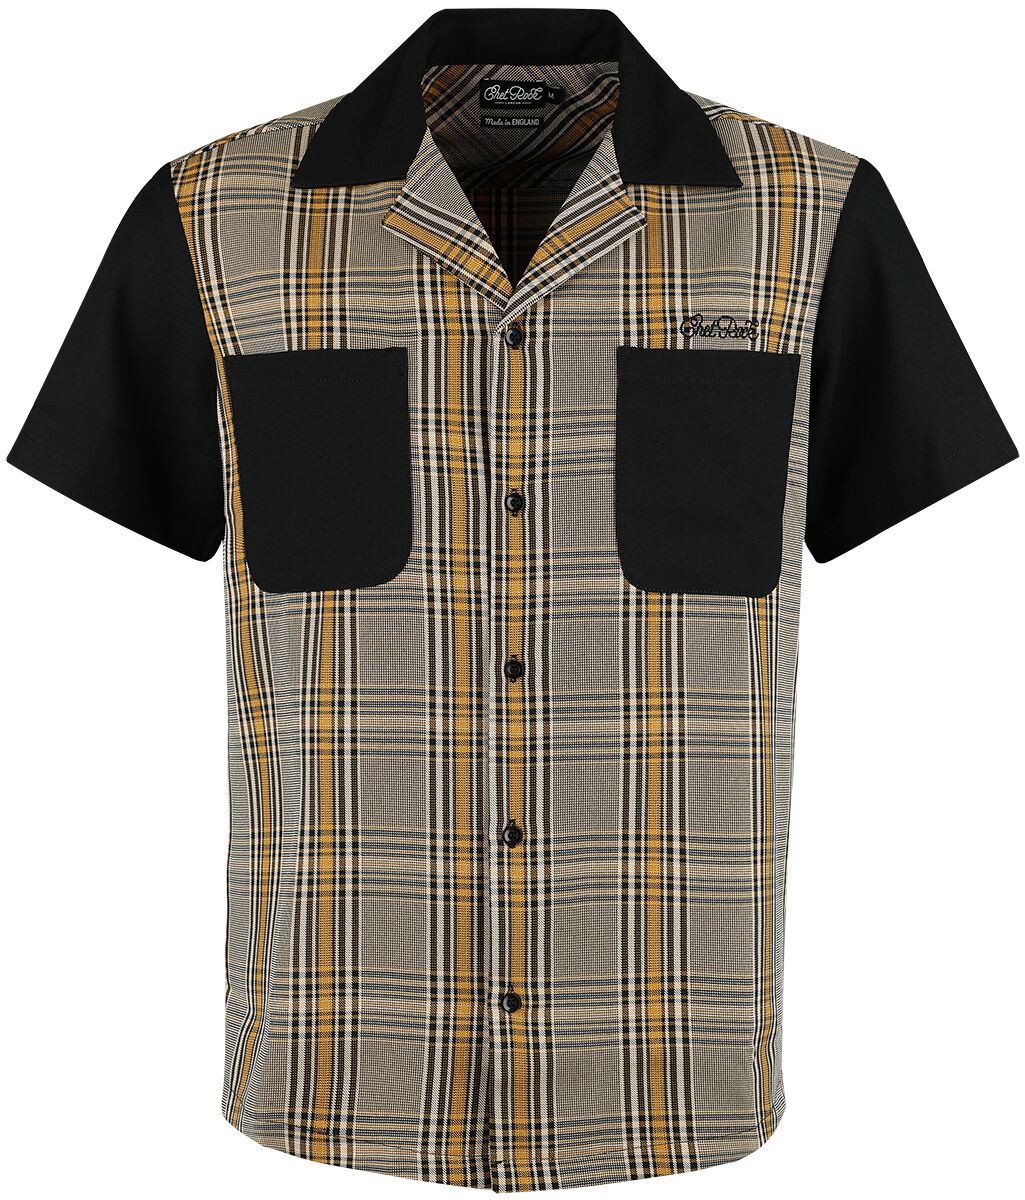 Chet Rock - Rockabilly Kurzarmhemd - Douglas Shirt - S bis 4XL - für Männer - Größe L - multicolor